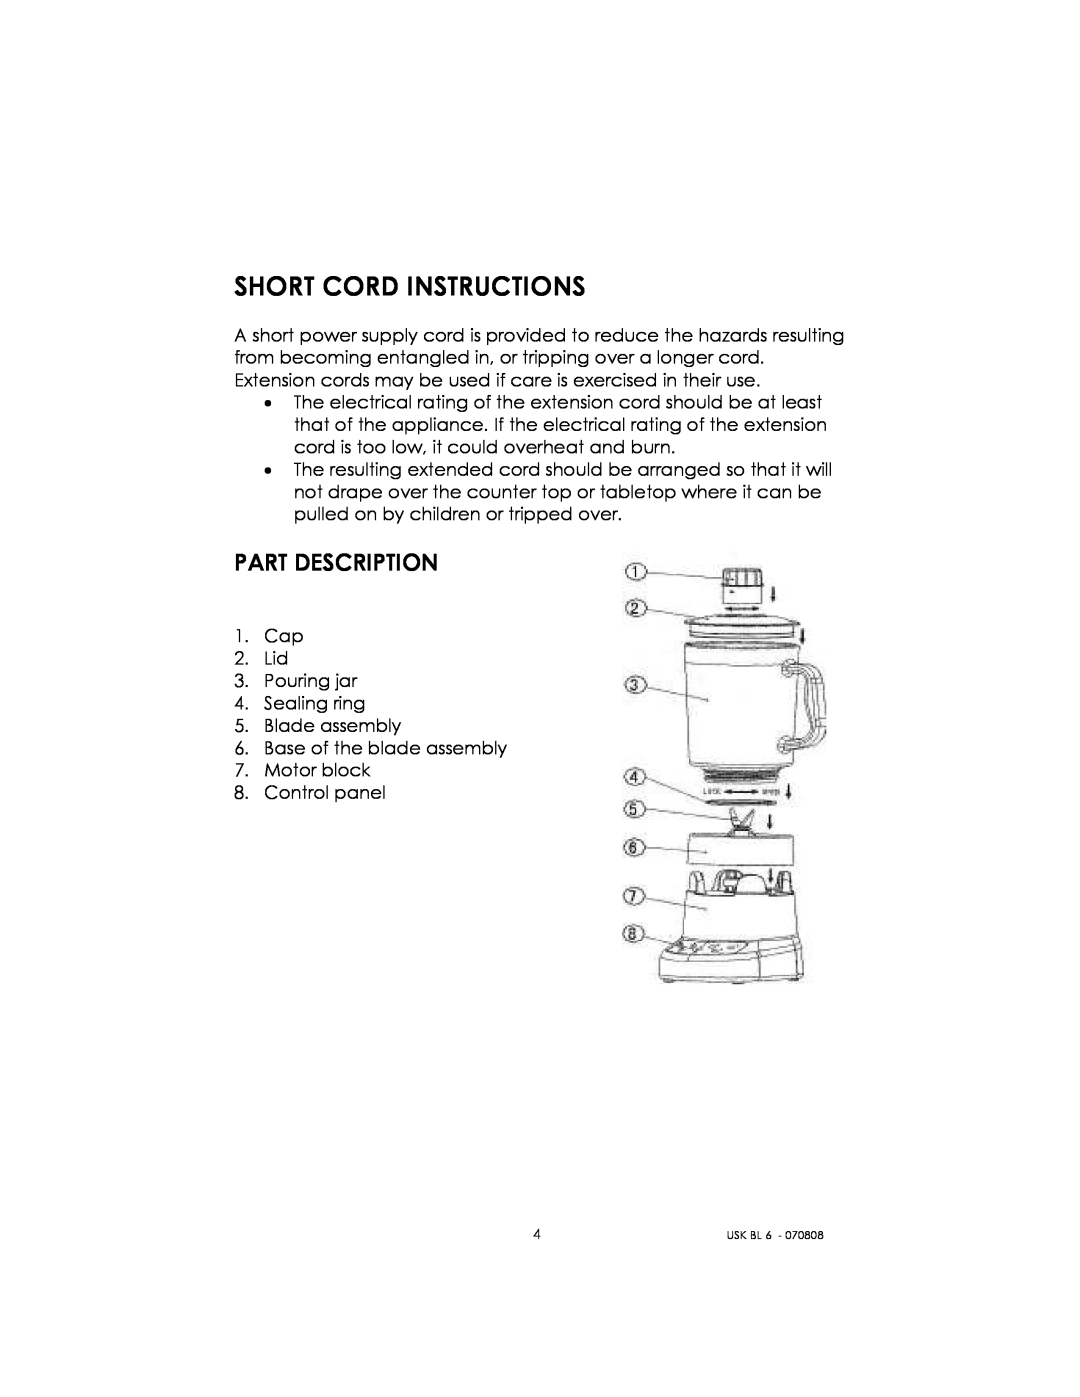 Kalorik USK BL 6 manual Short Cord Instructions, Part Description 